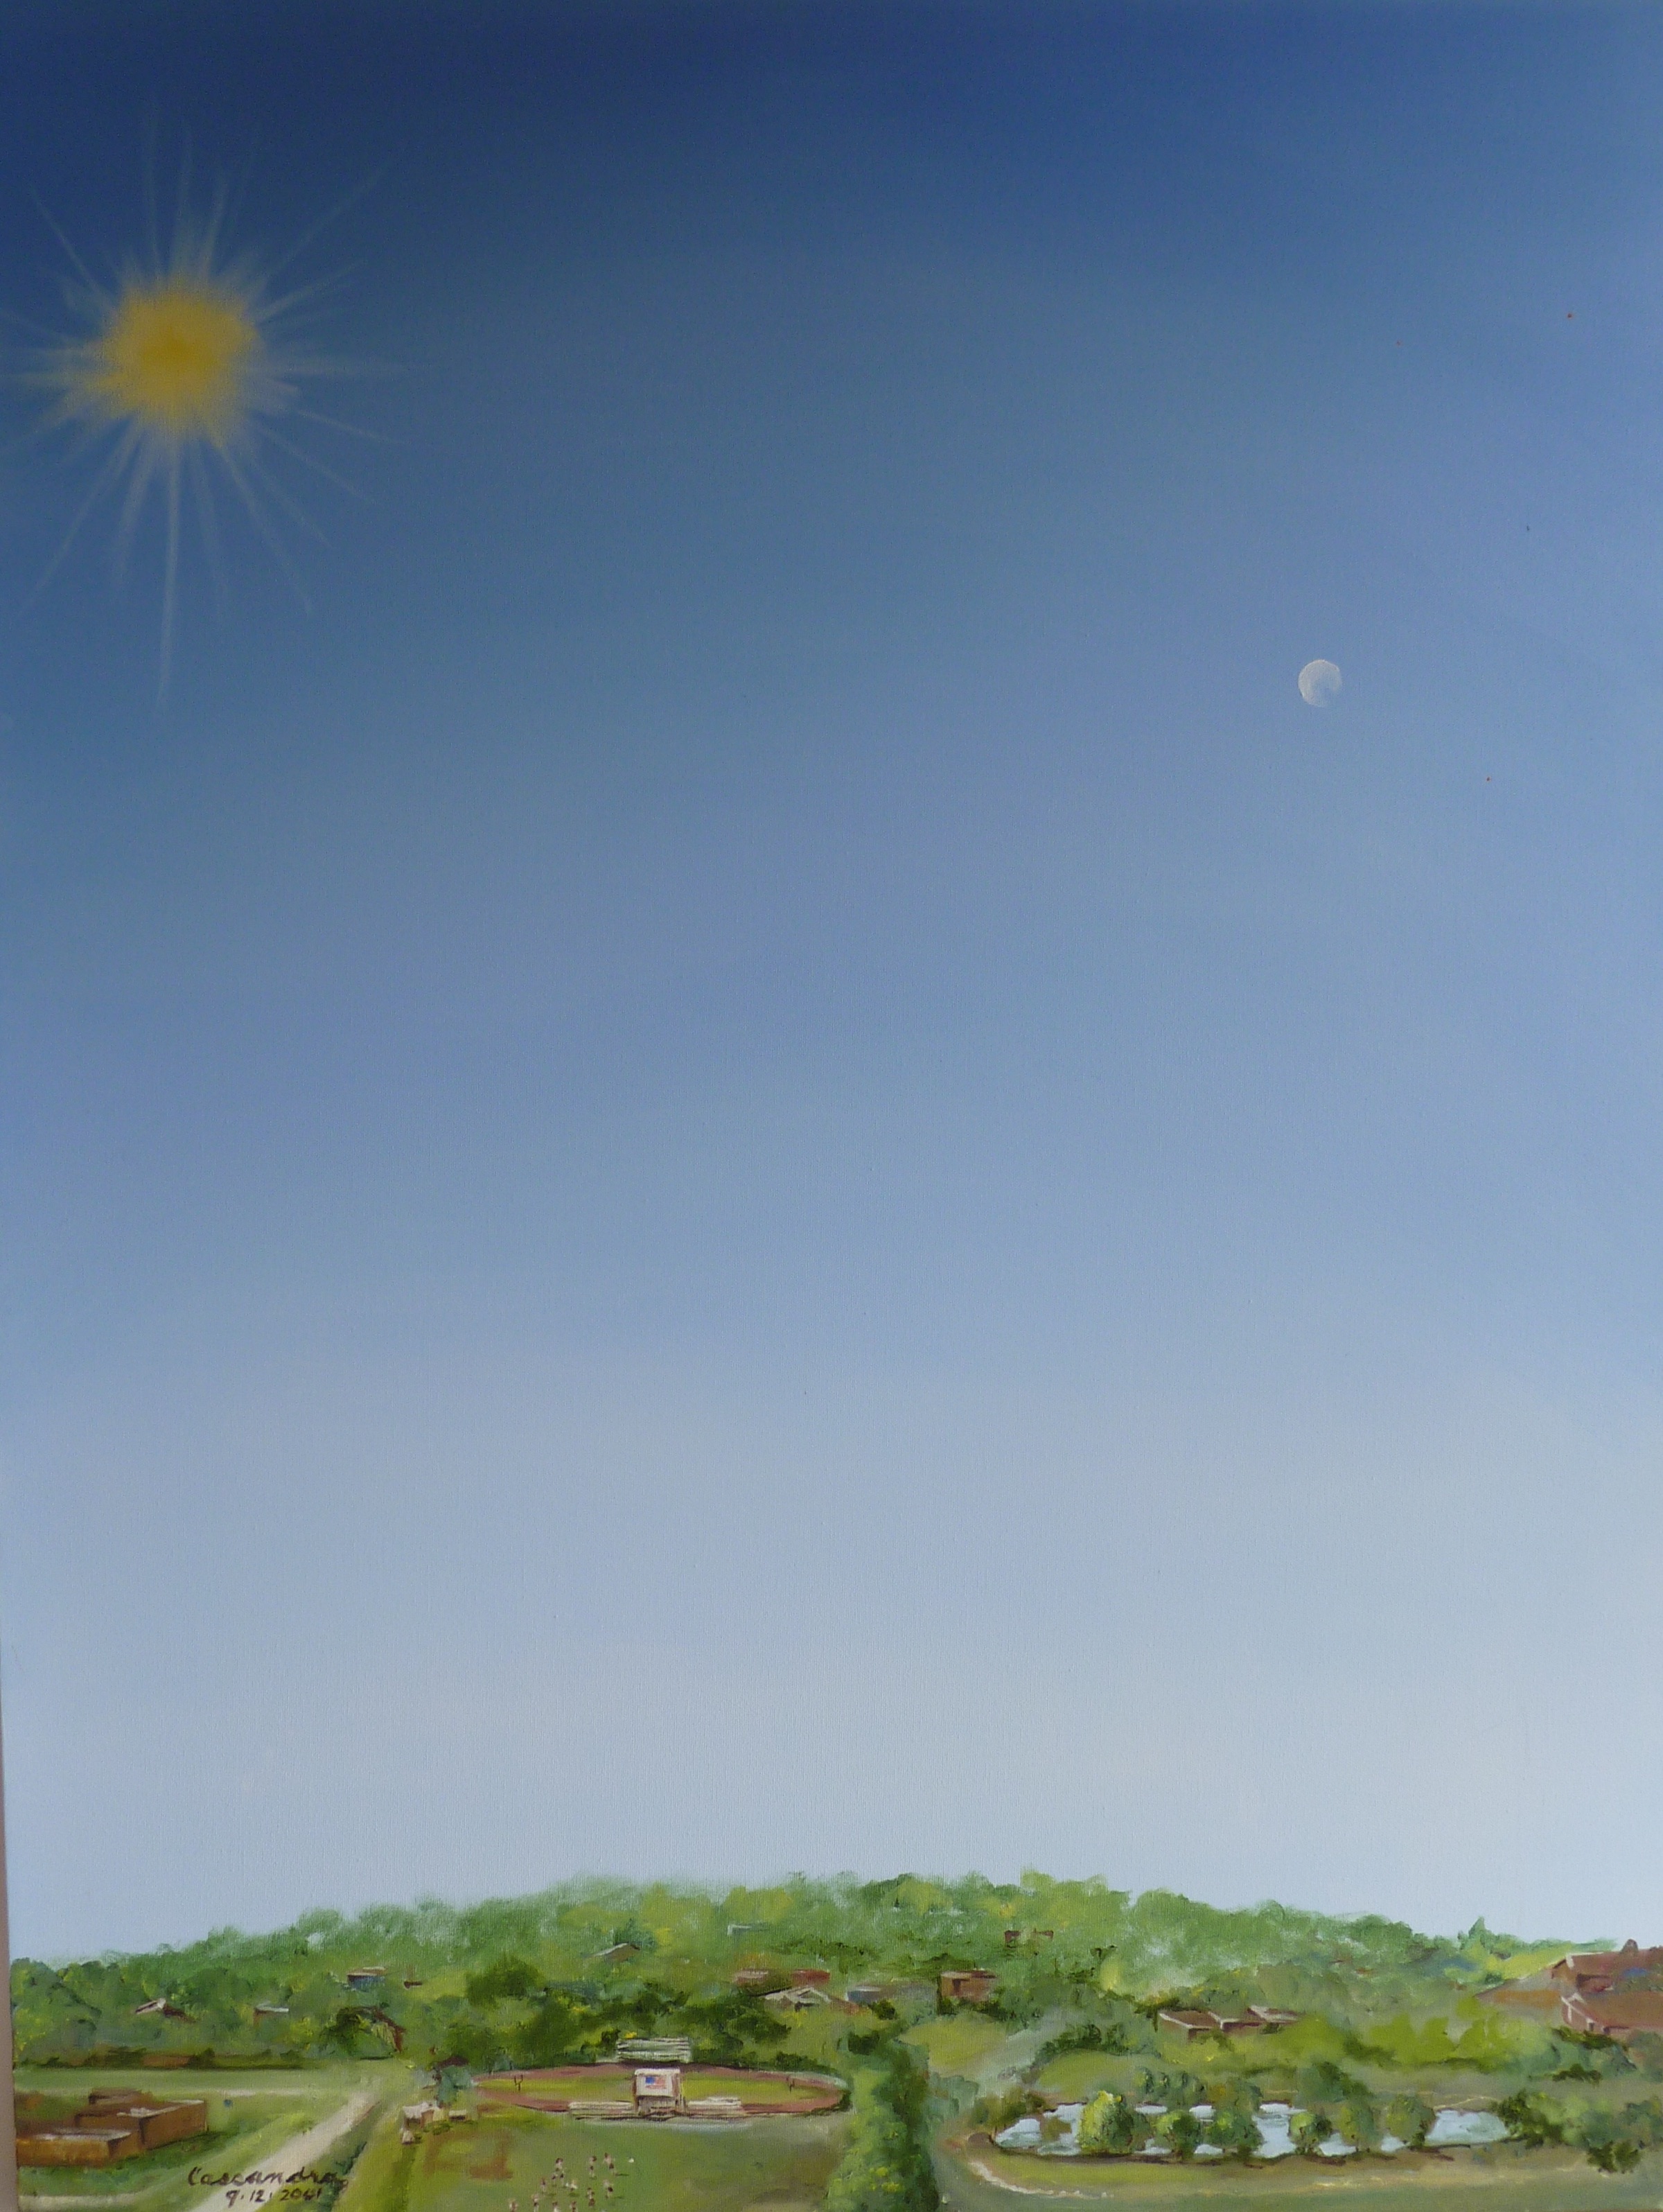 blue sky, sun and moon, park, united states flag, trees, school, football field